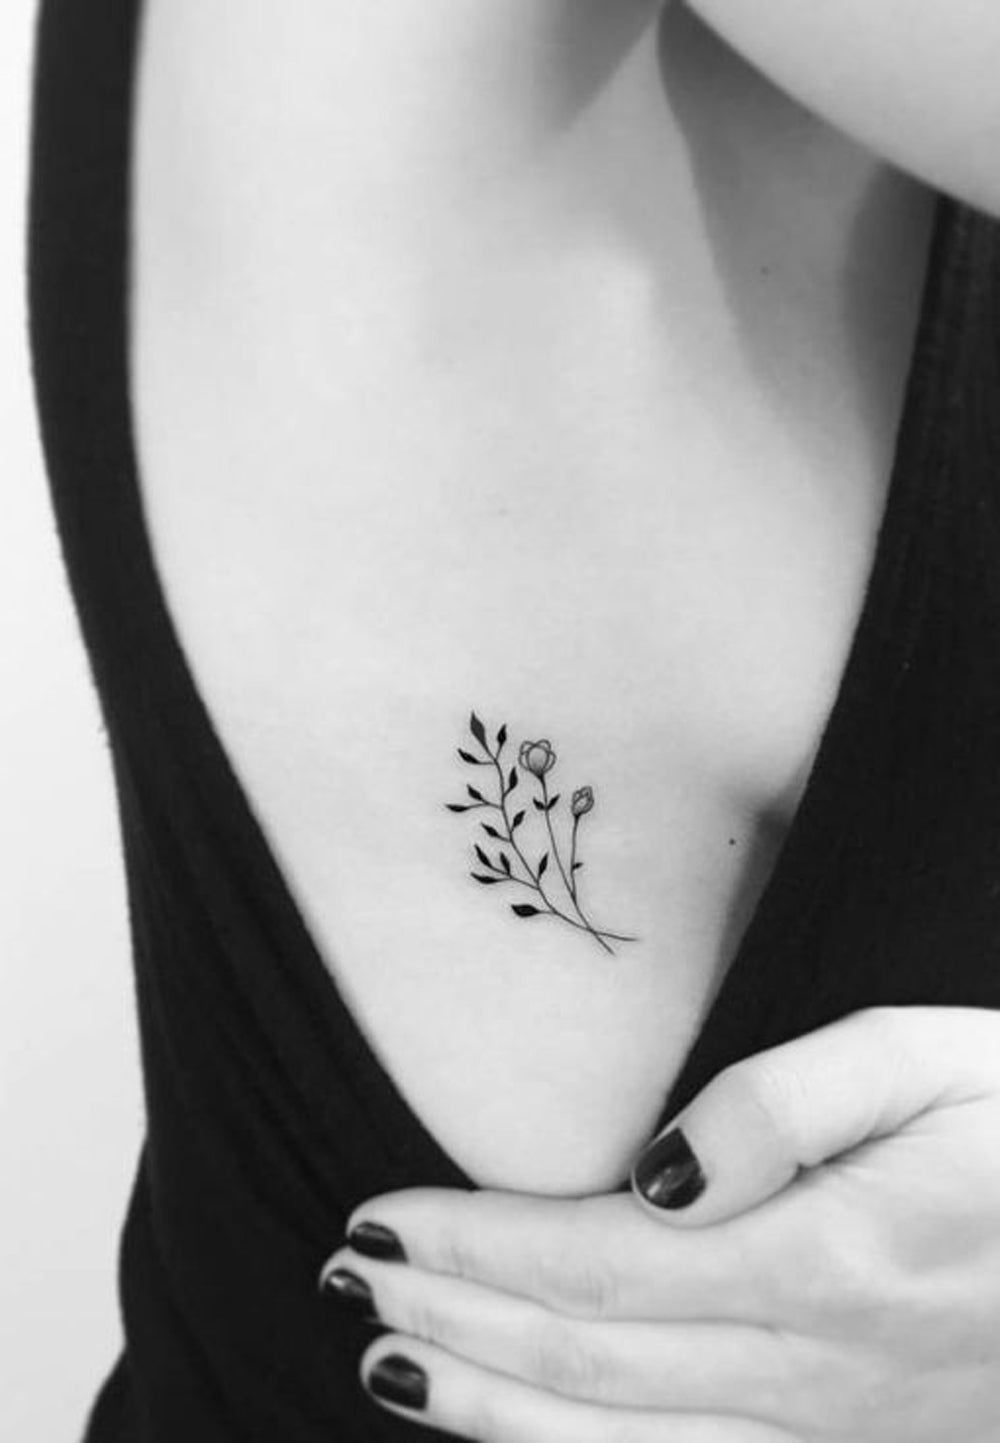 Simple Small Blooming Flower Leaves Rib Tattoo Ideas for Women - Side Body Rose Tat -   flor mínima pequeña flor deja las Ideas del tatuaje de la costilla para las mujeres - www.MyBodiArt.com